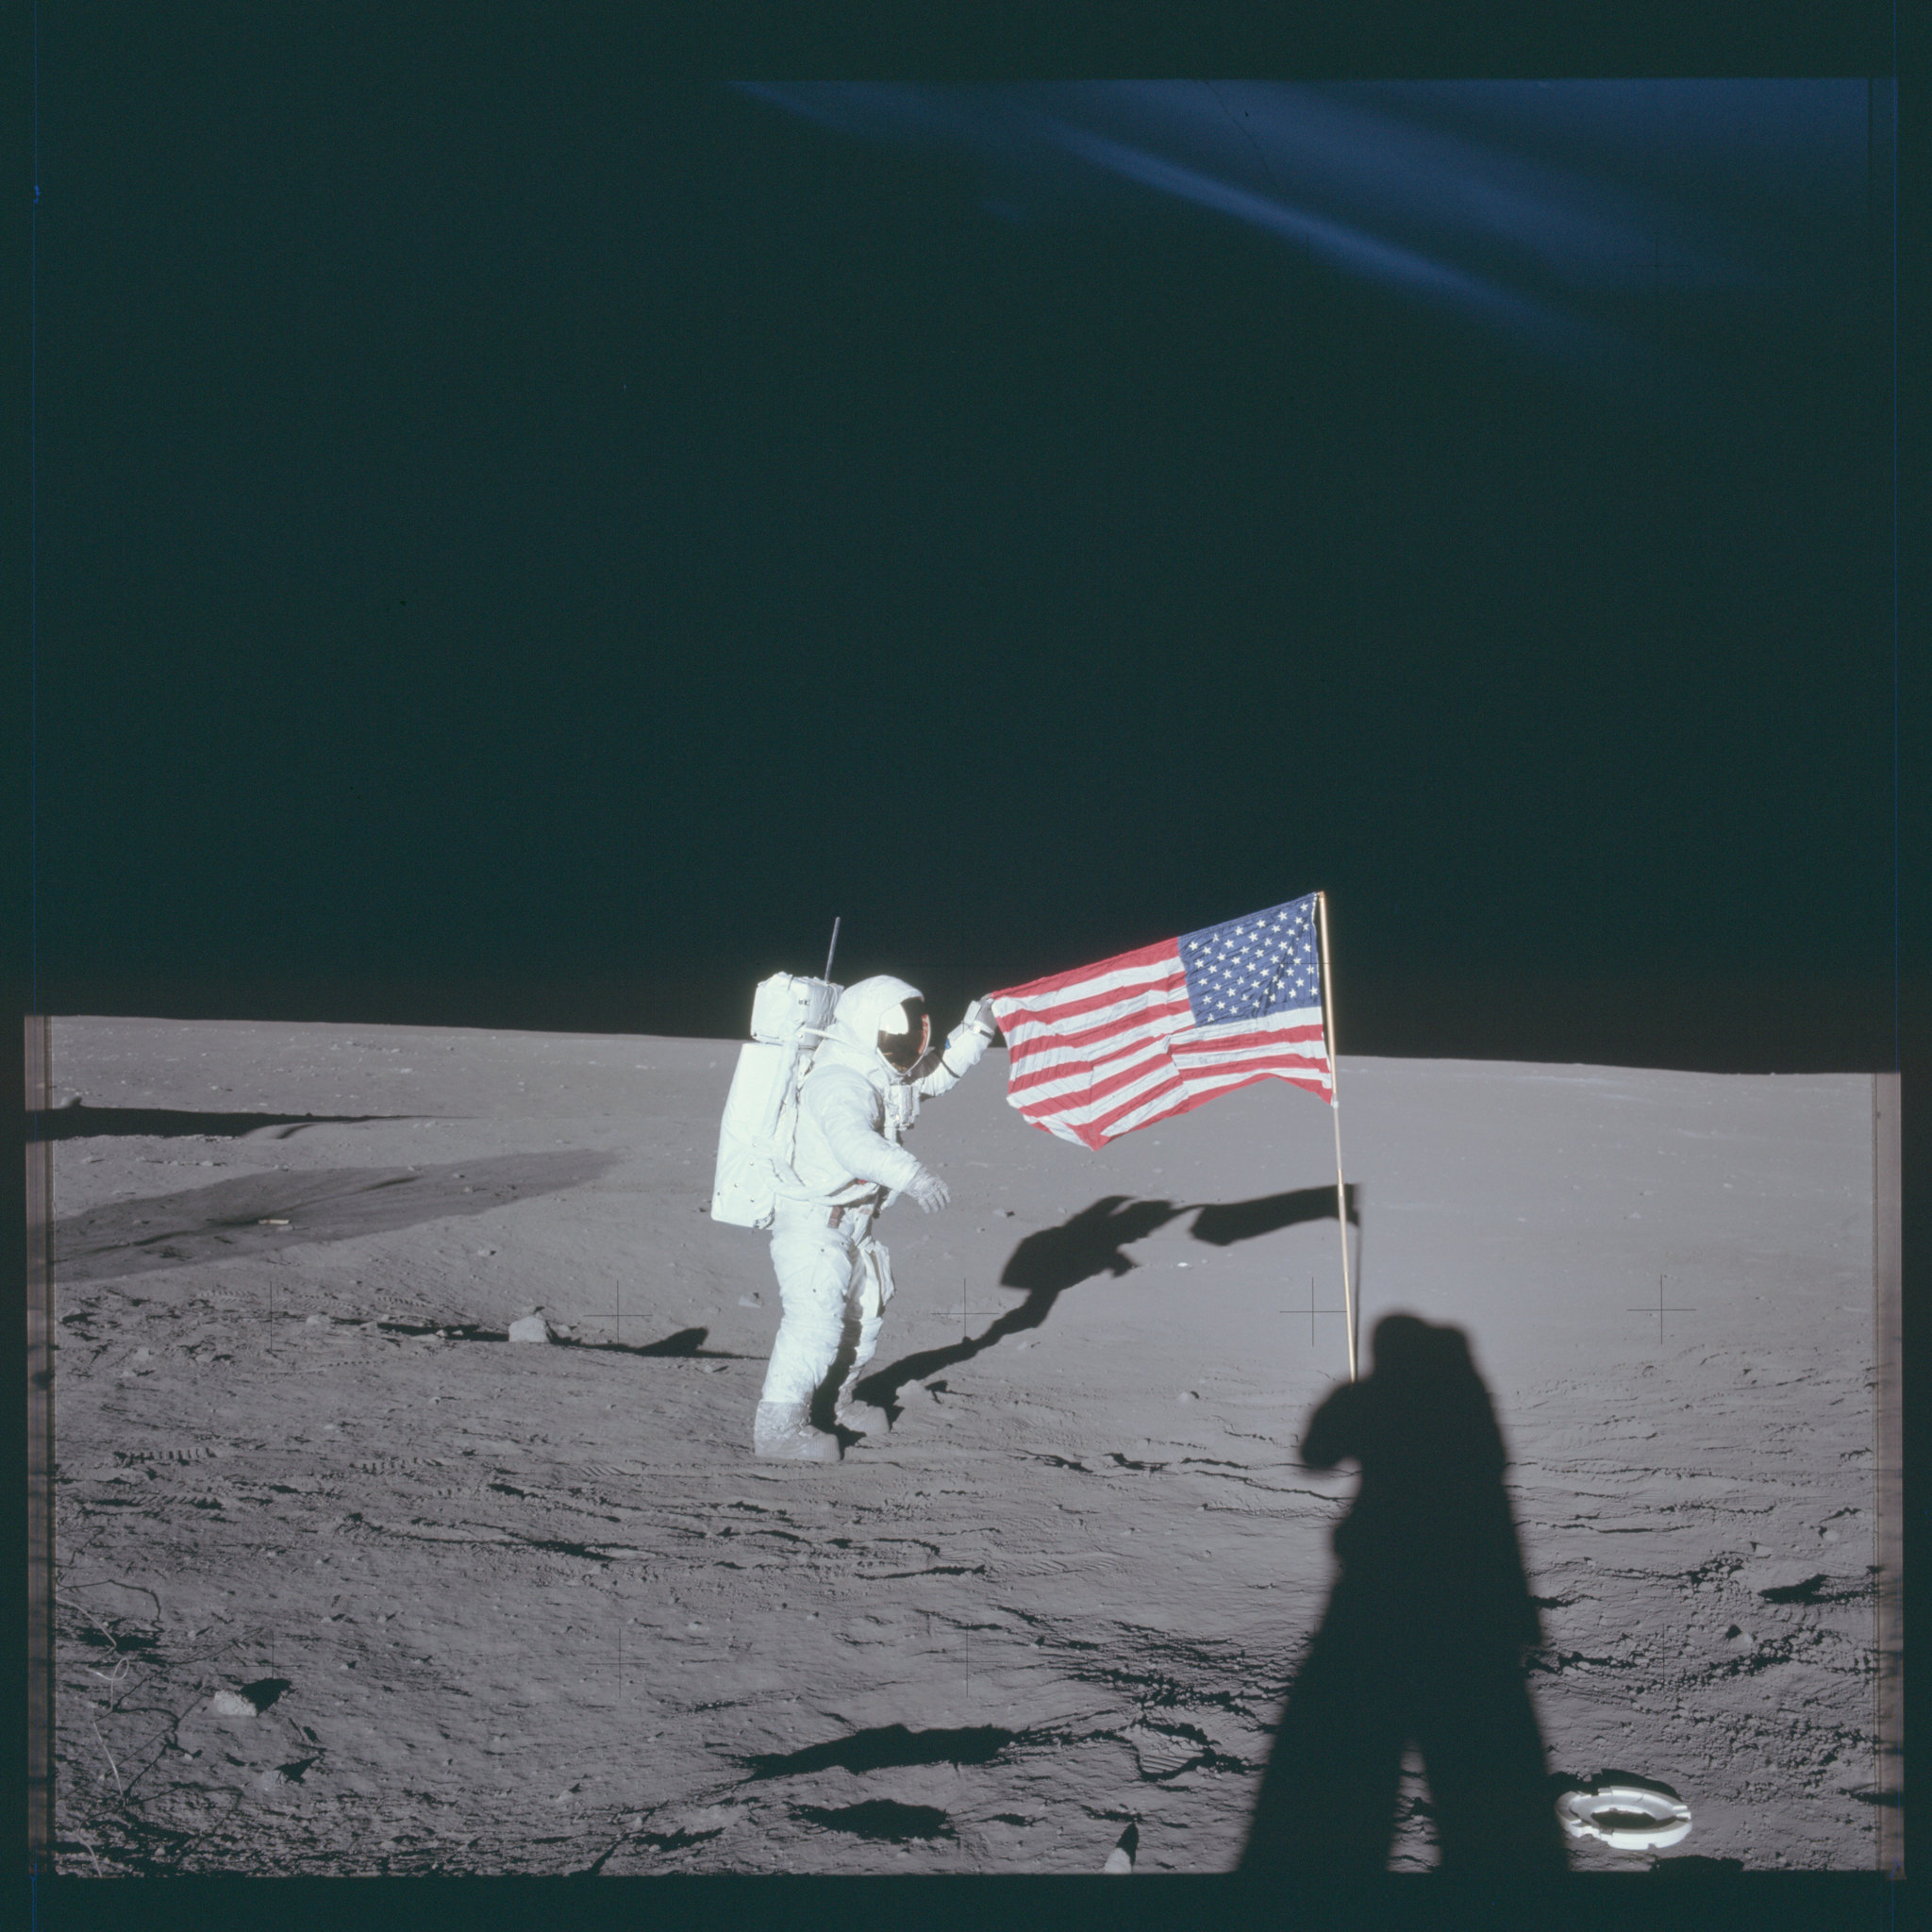 Das Project Apollo Archive | Hochauflösenden Fotos der Apollo Missionen der NASA